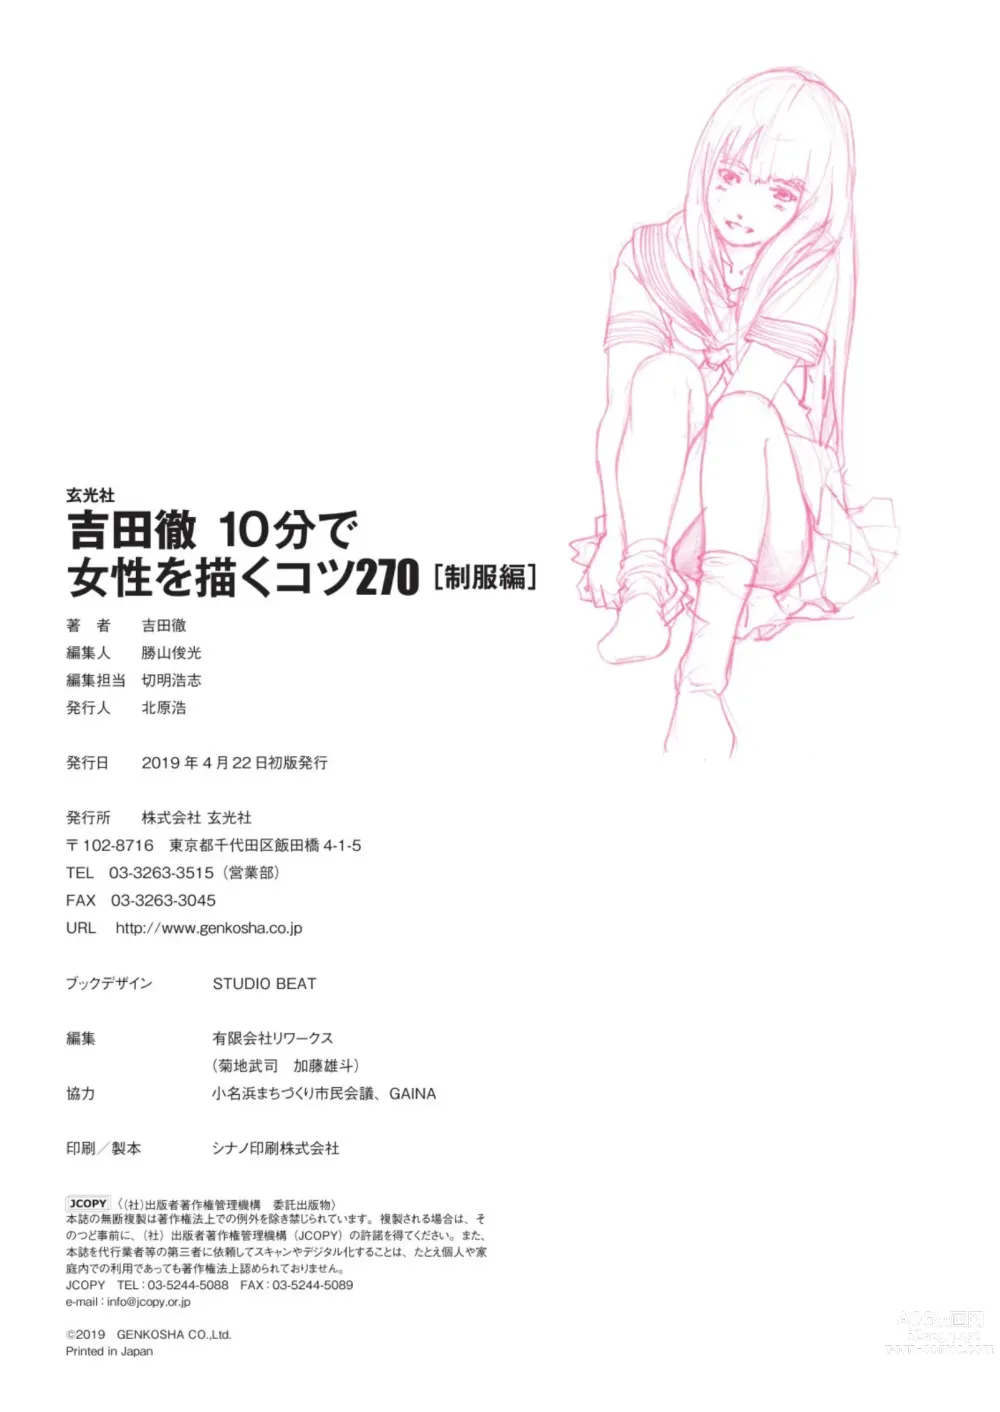 Page 158 of manga Toru Yoshida Tips for drawing women in 10 minutes 270 Uniforms